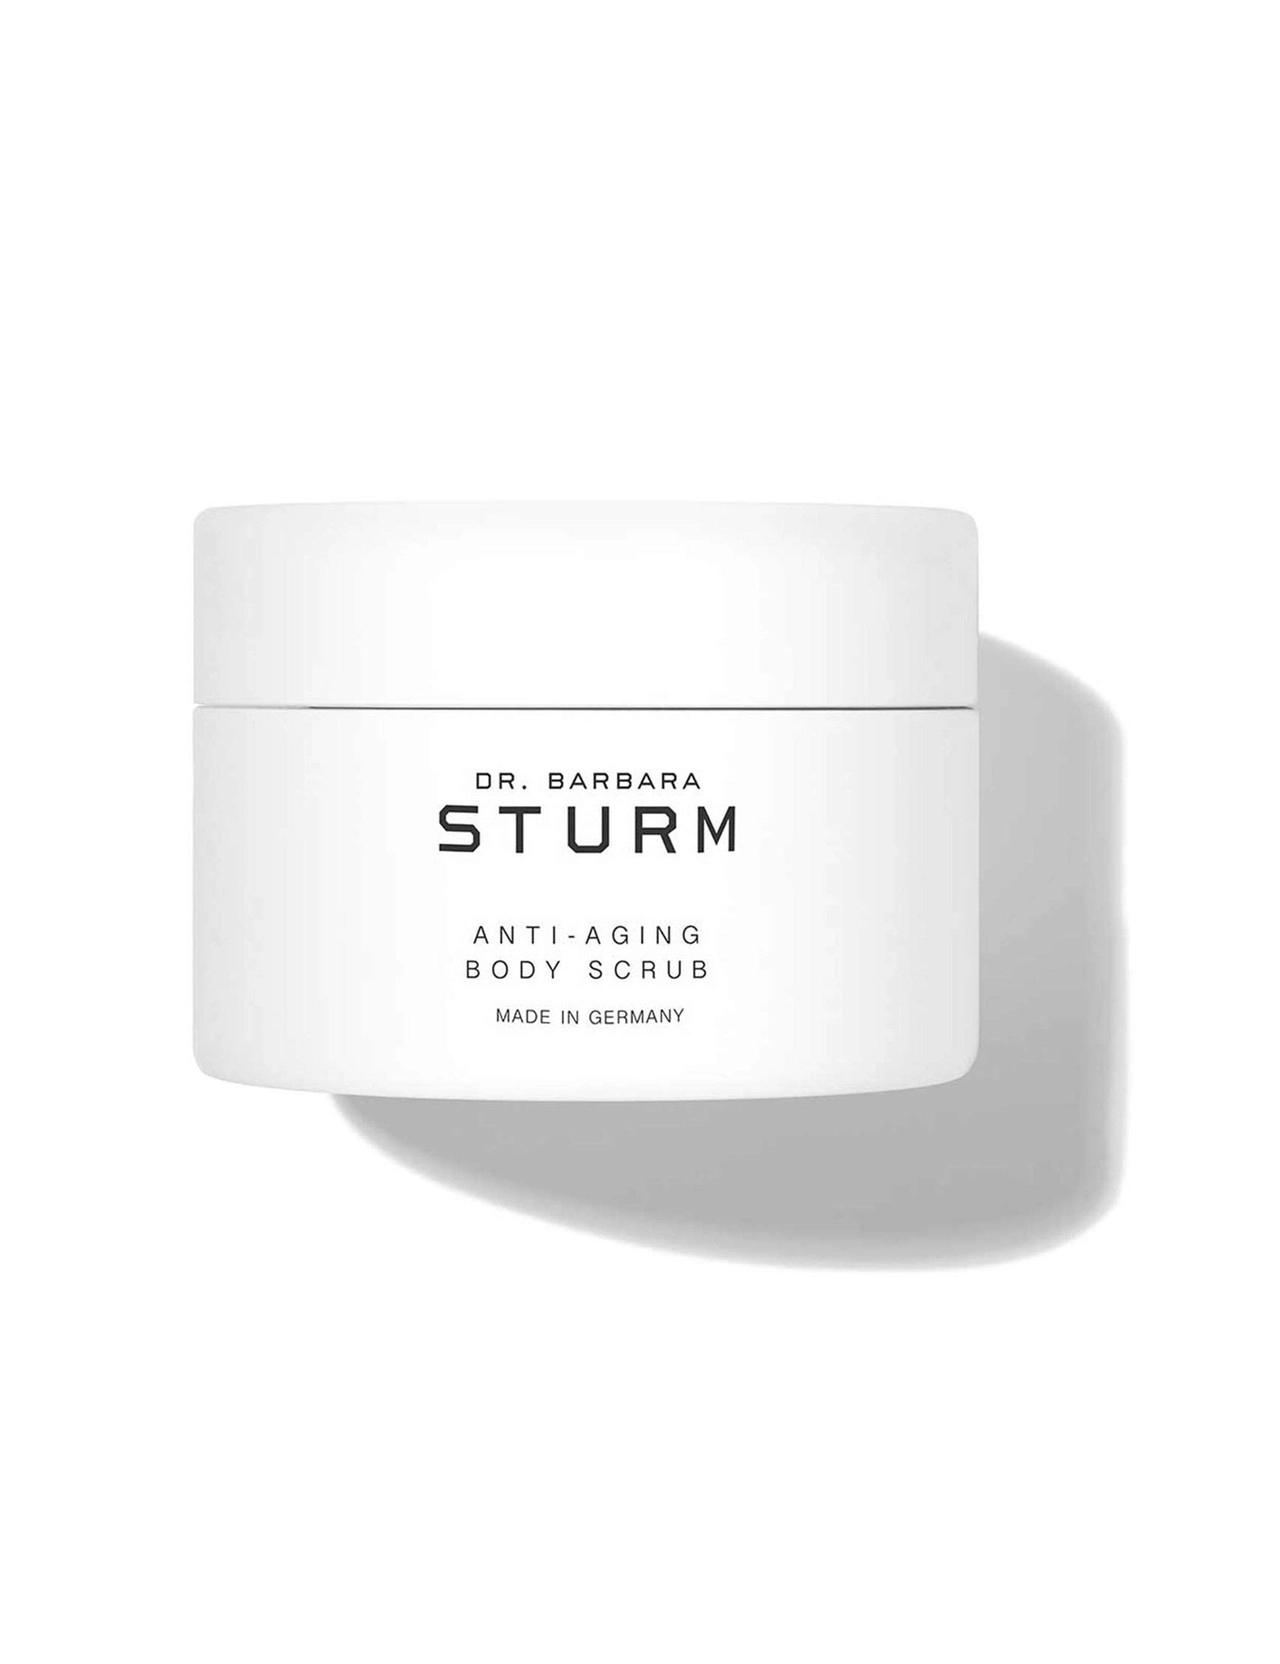 best new beauty products dr barbara sturm anti-aging body scrub